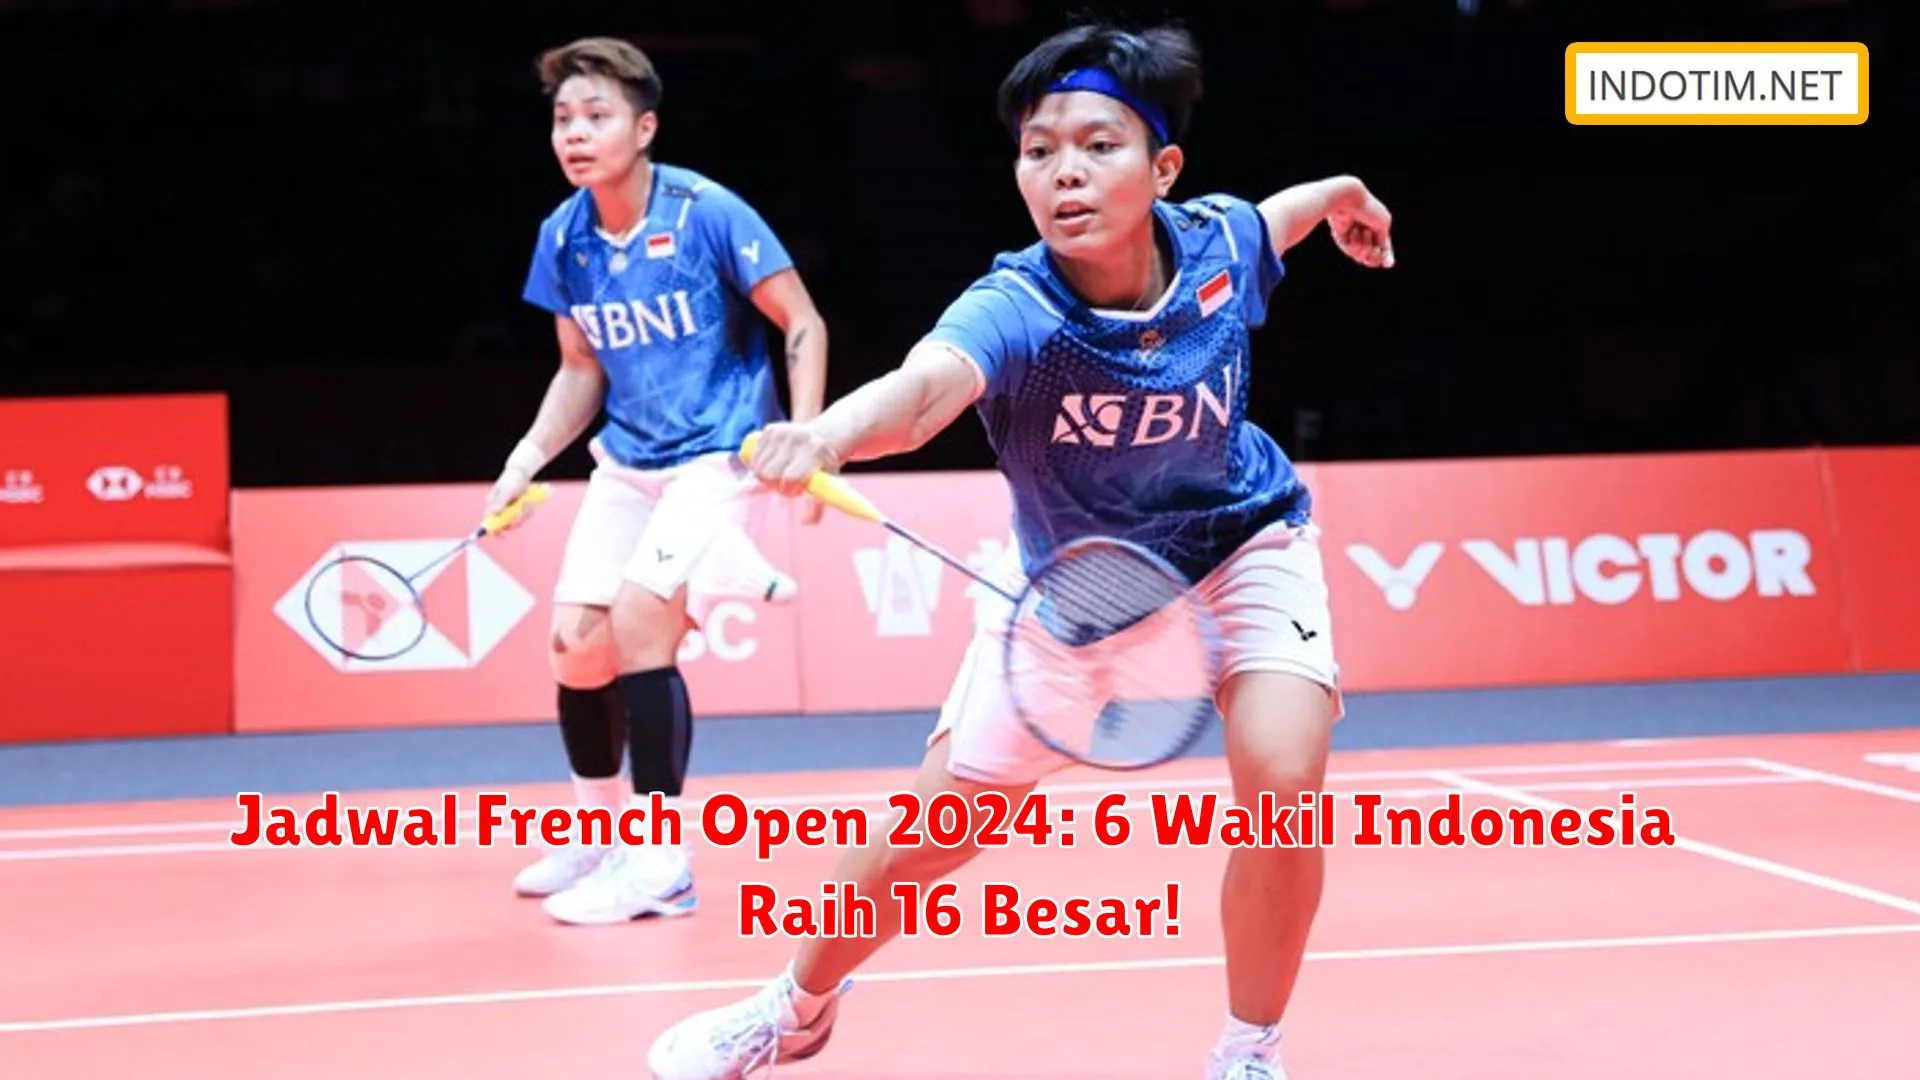 Jadwal French Open 2024: 6 Wakil Indonesia Raih 16 Besar!